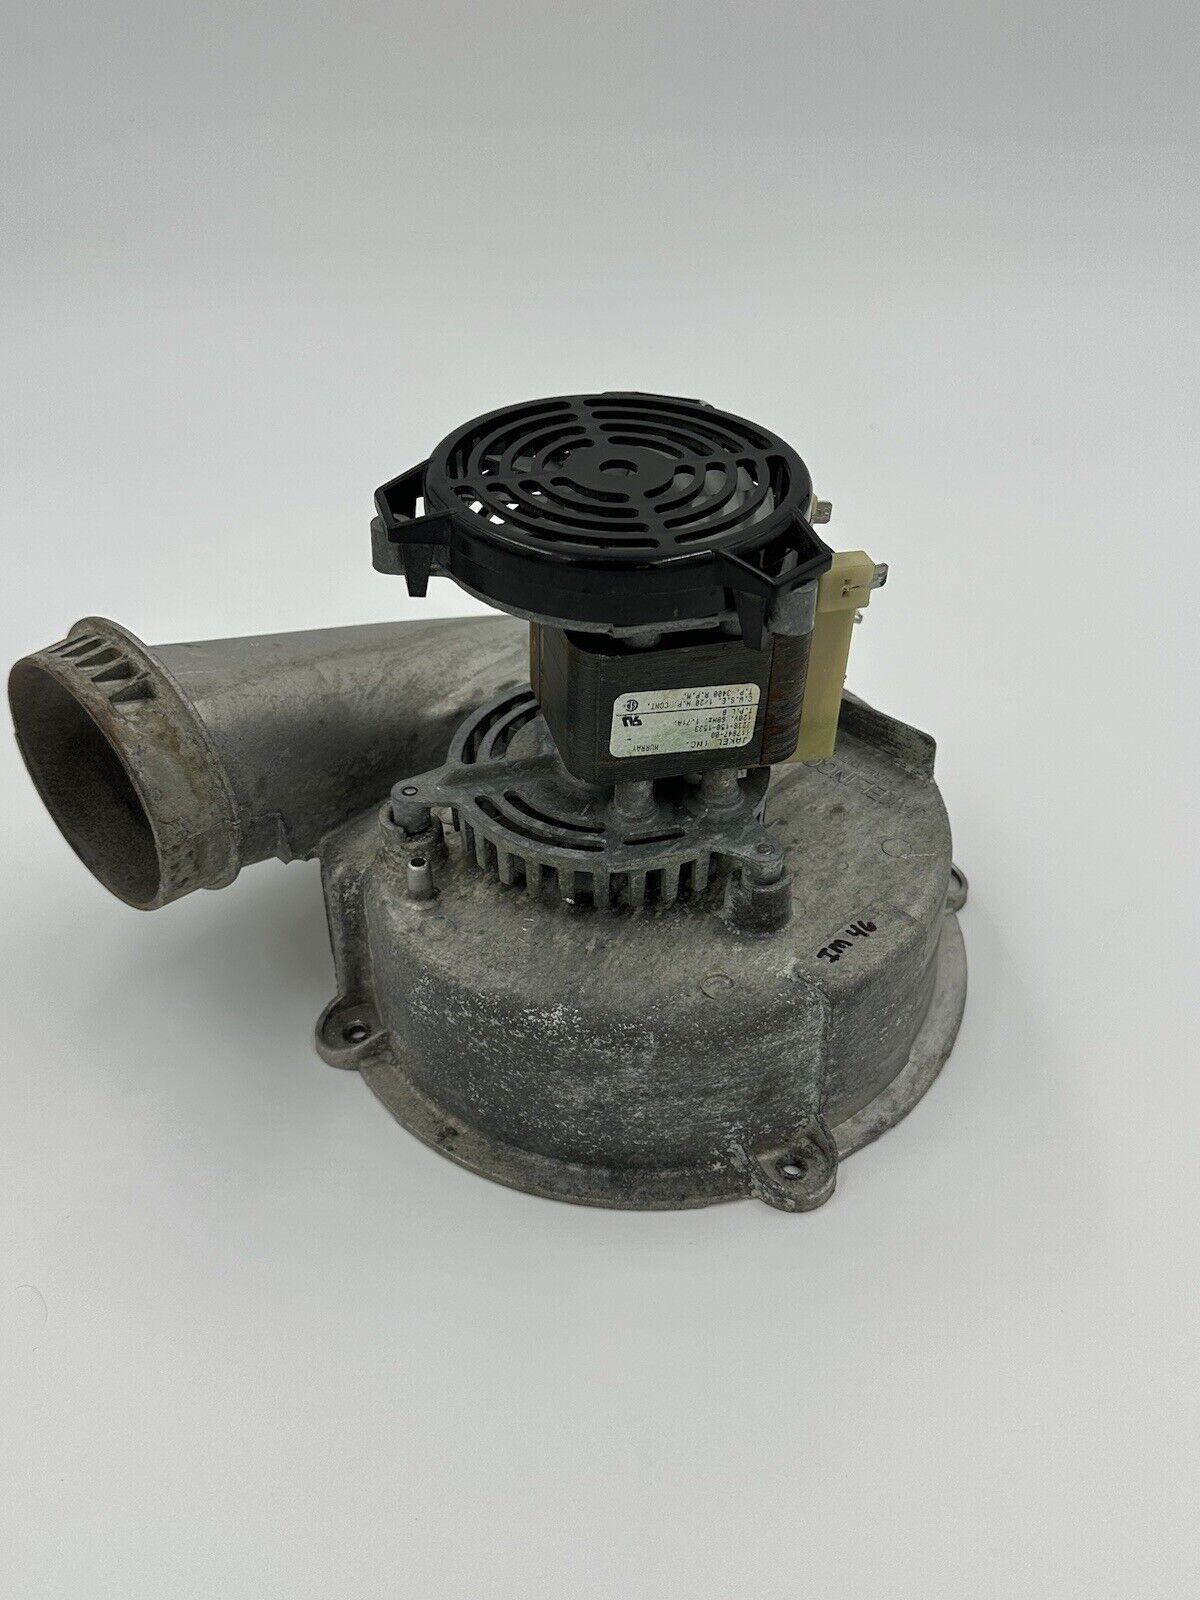 JAKEL 117847-00 AMETEK J238-150-1533 Draft Inducer Blower Motor 3400 RPM #IM46